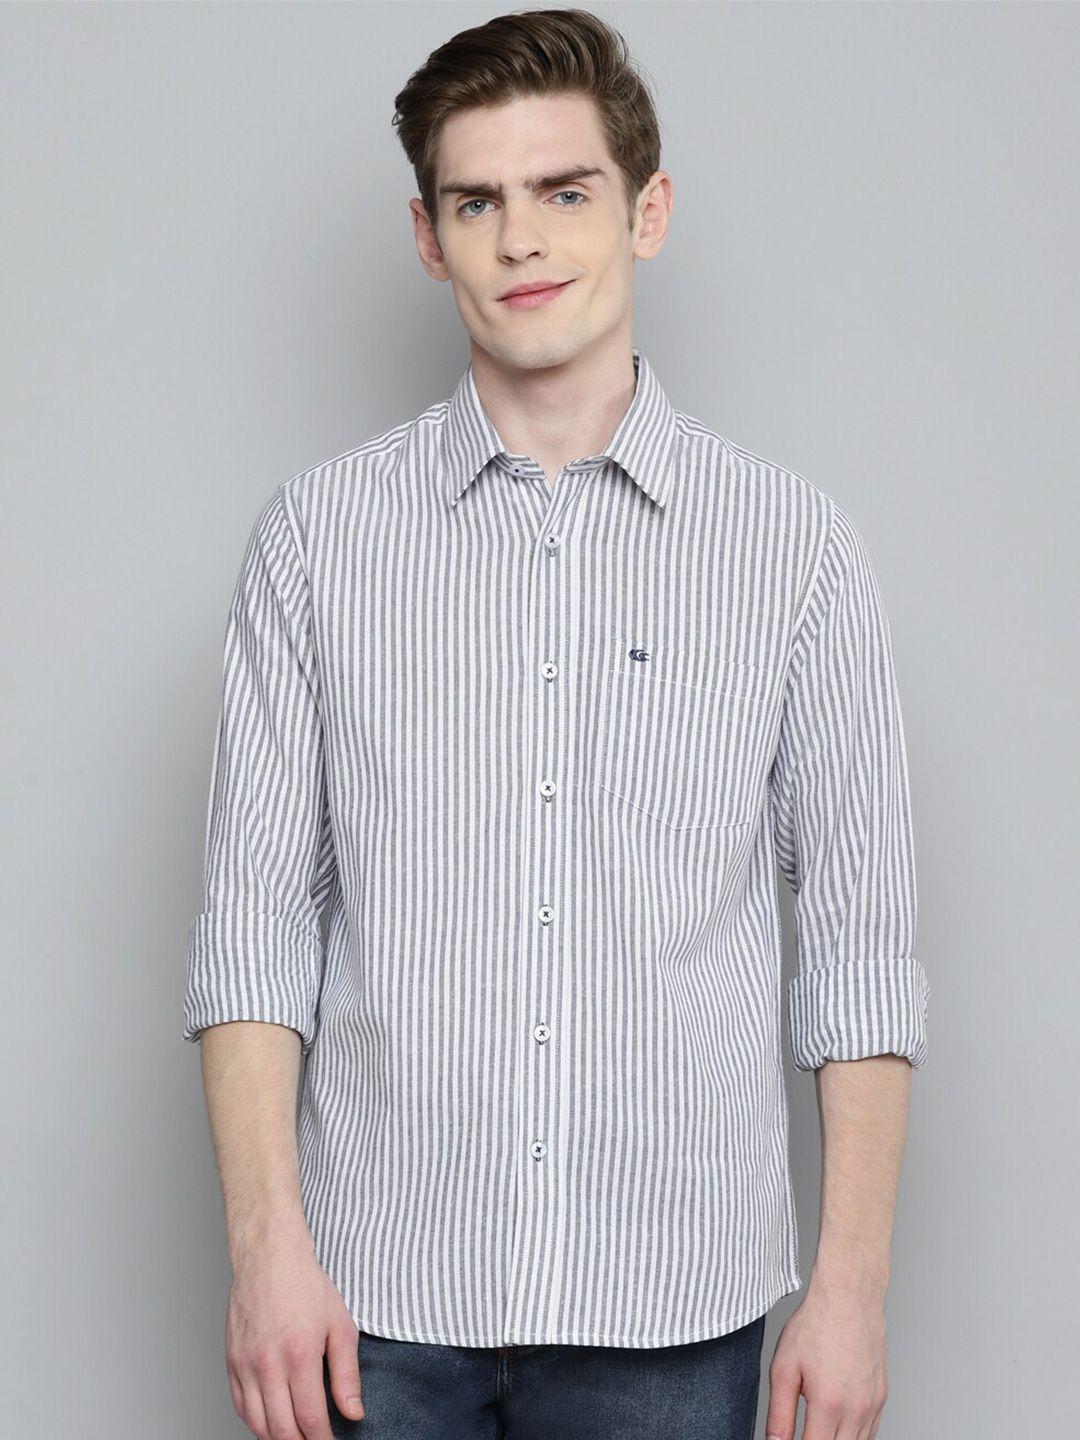 allen-cooper-striped-slim-fit-opaque-cotton-casual-shirt